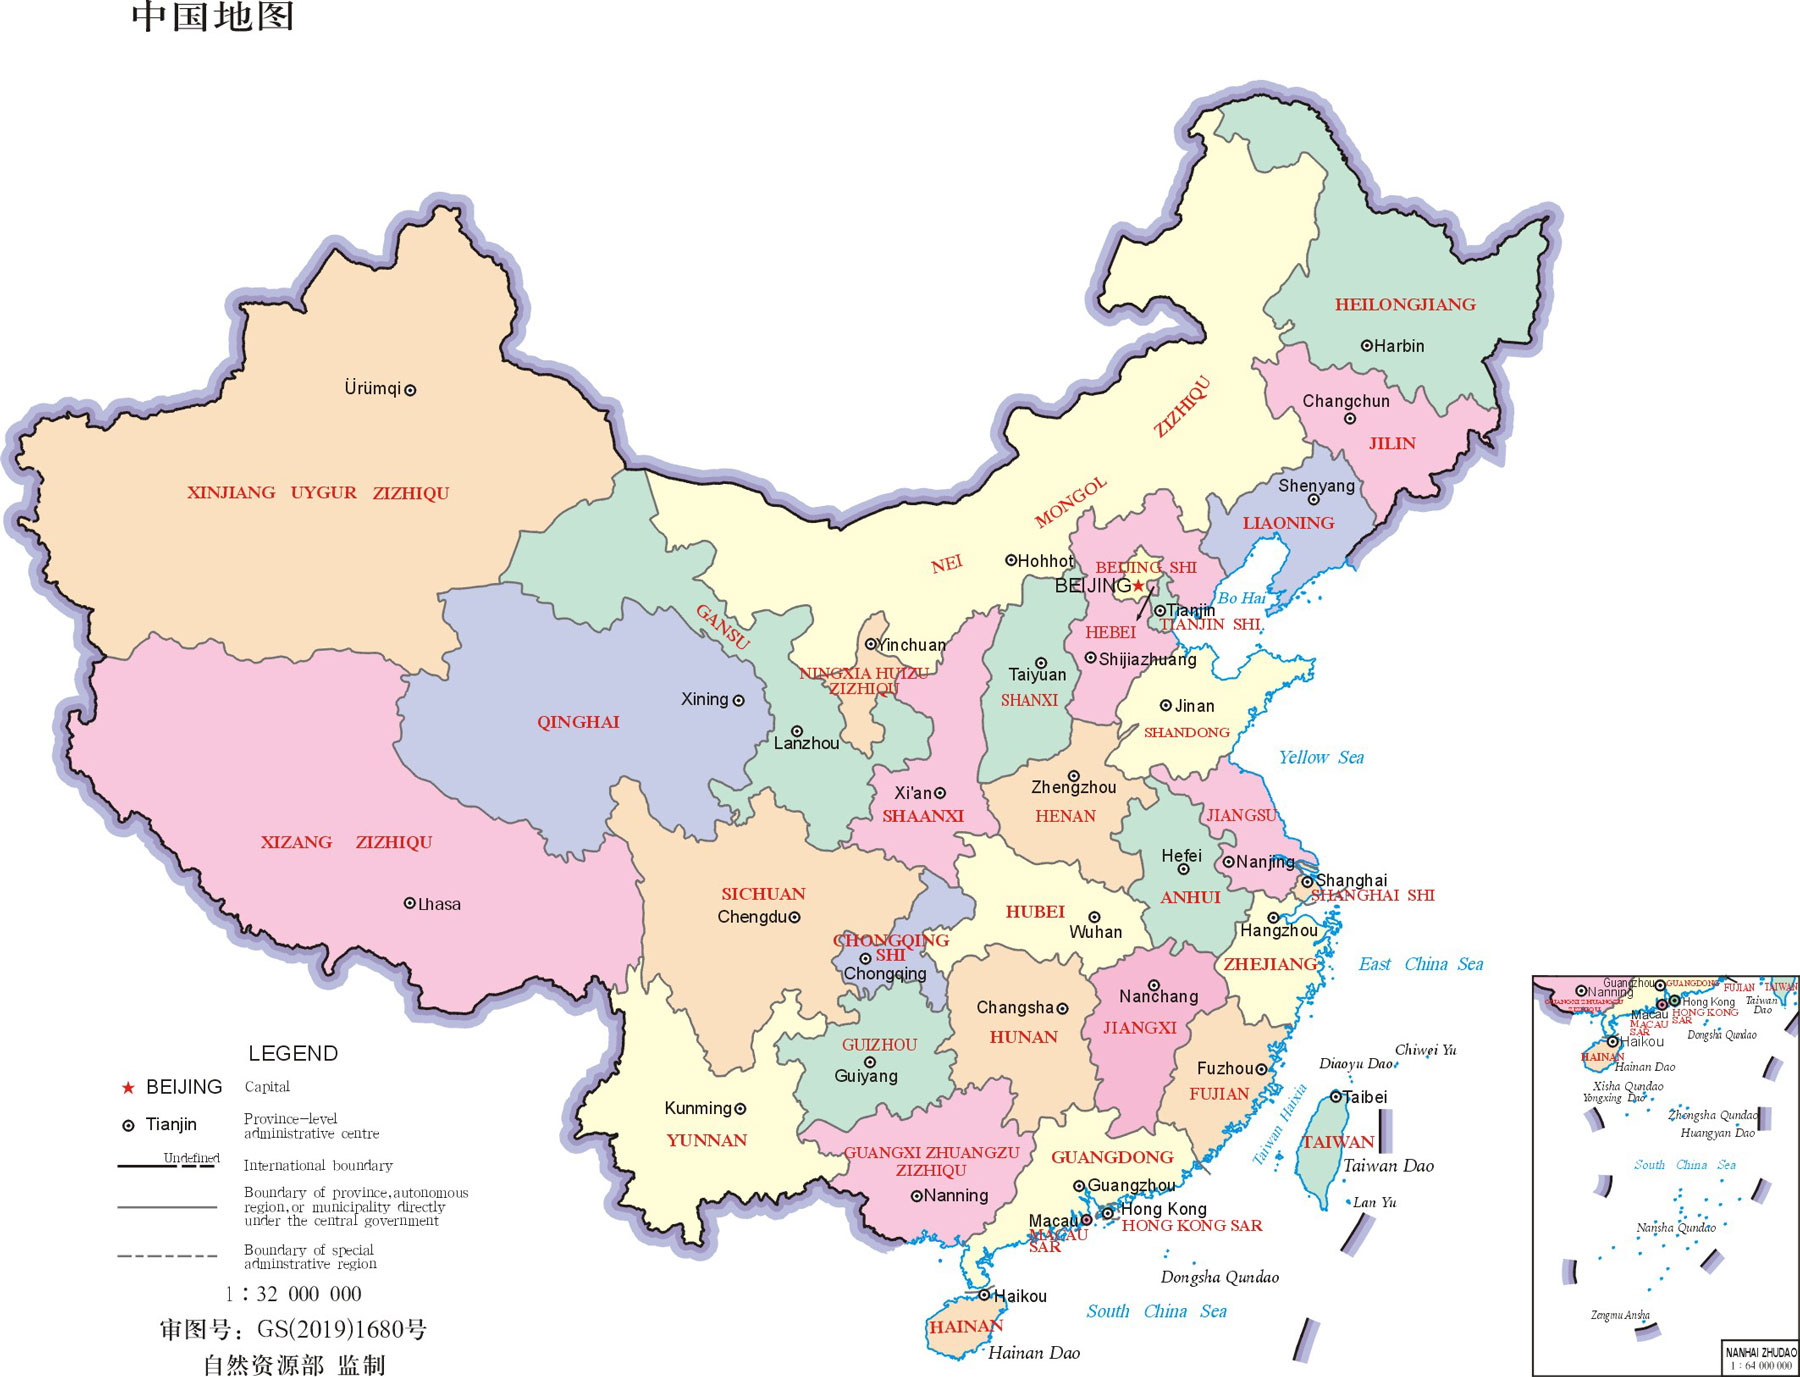 Show Map Of China China Provincial Map, Map of China Provinces, China Maps 2020